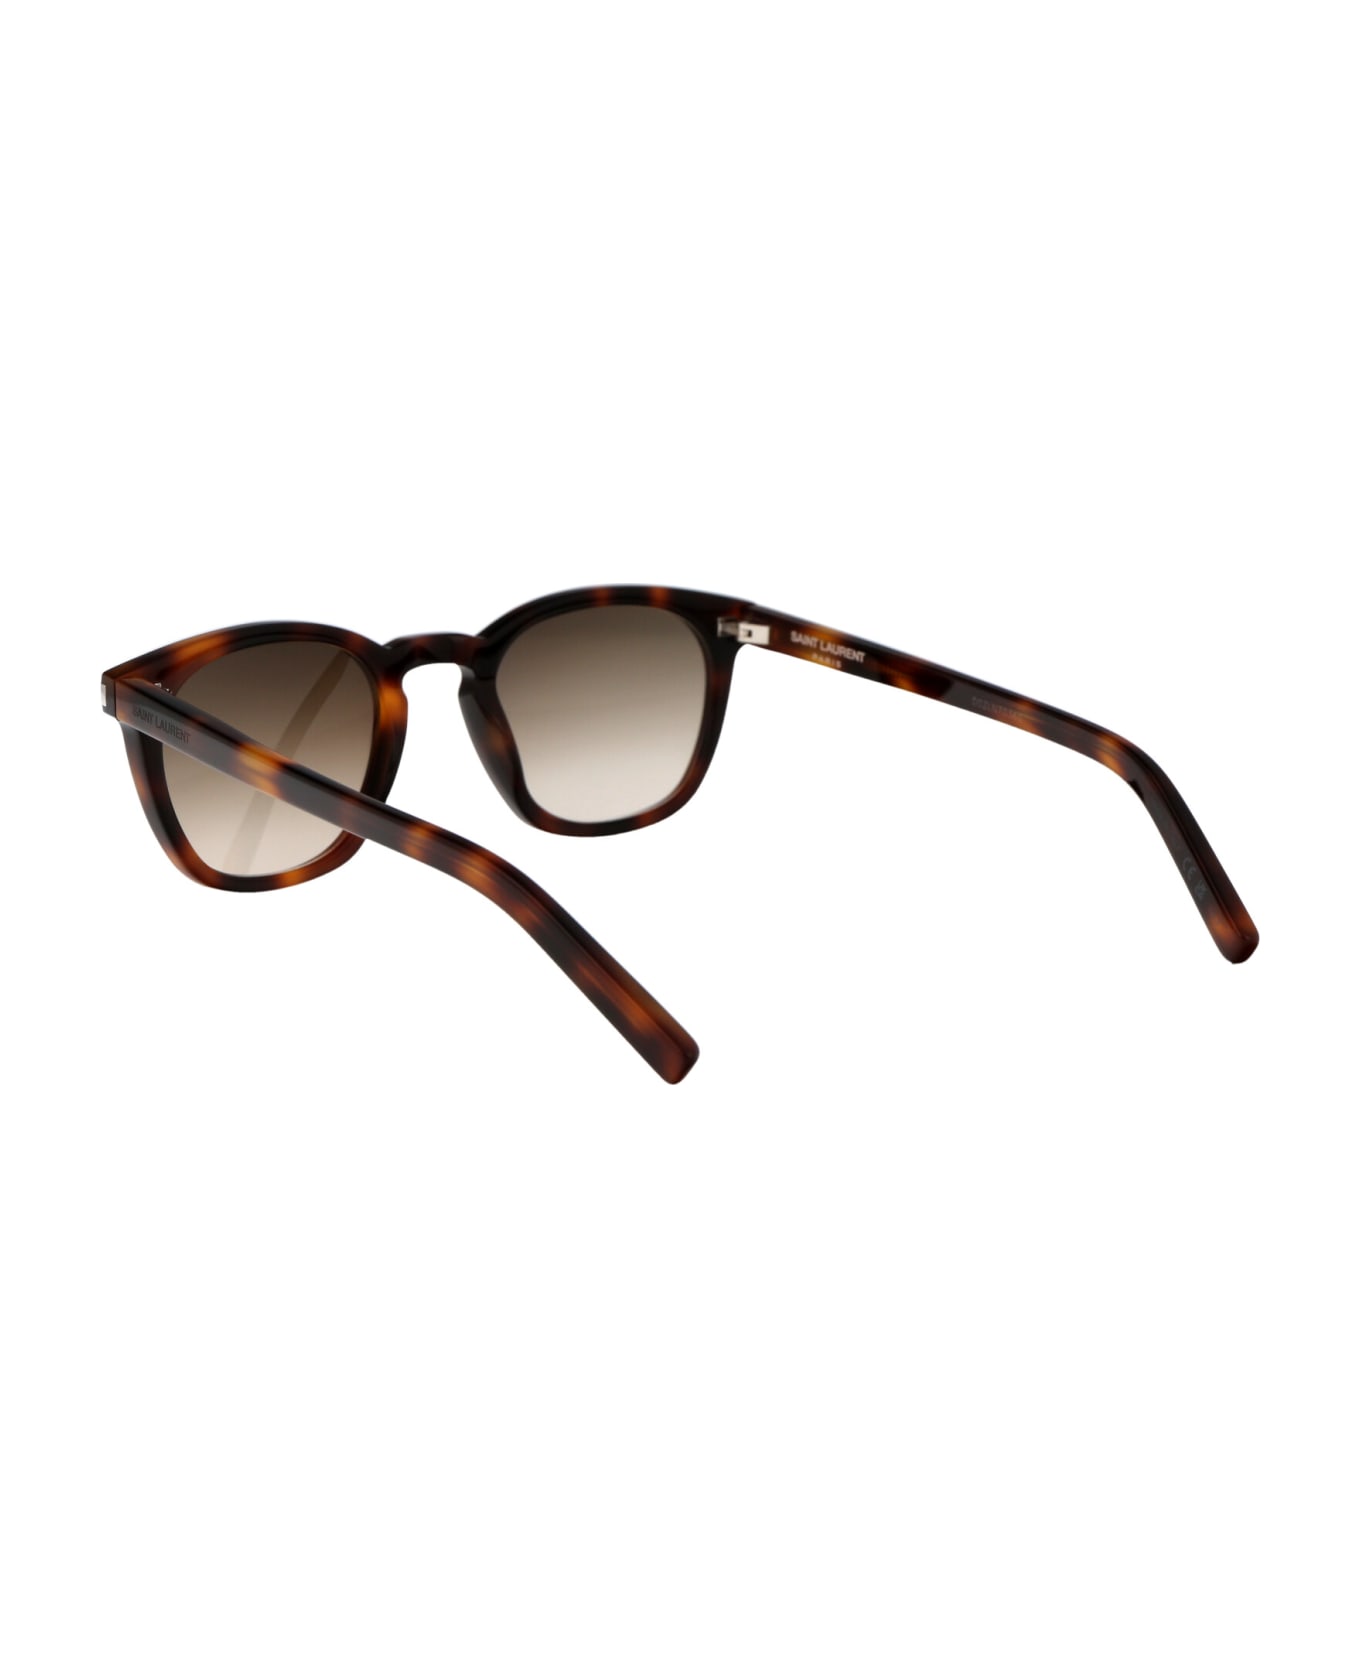 Saint Laurent Eyewear Sl 28 Sunglasses - 048 HAVANA HAVANA BROWN サングラス